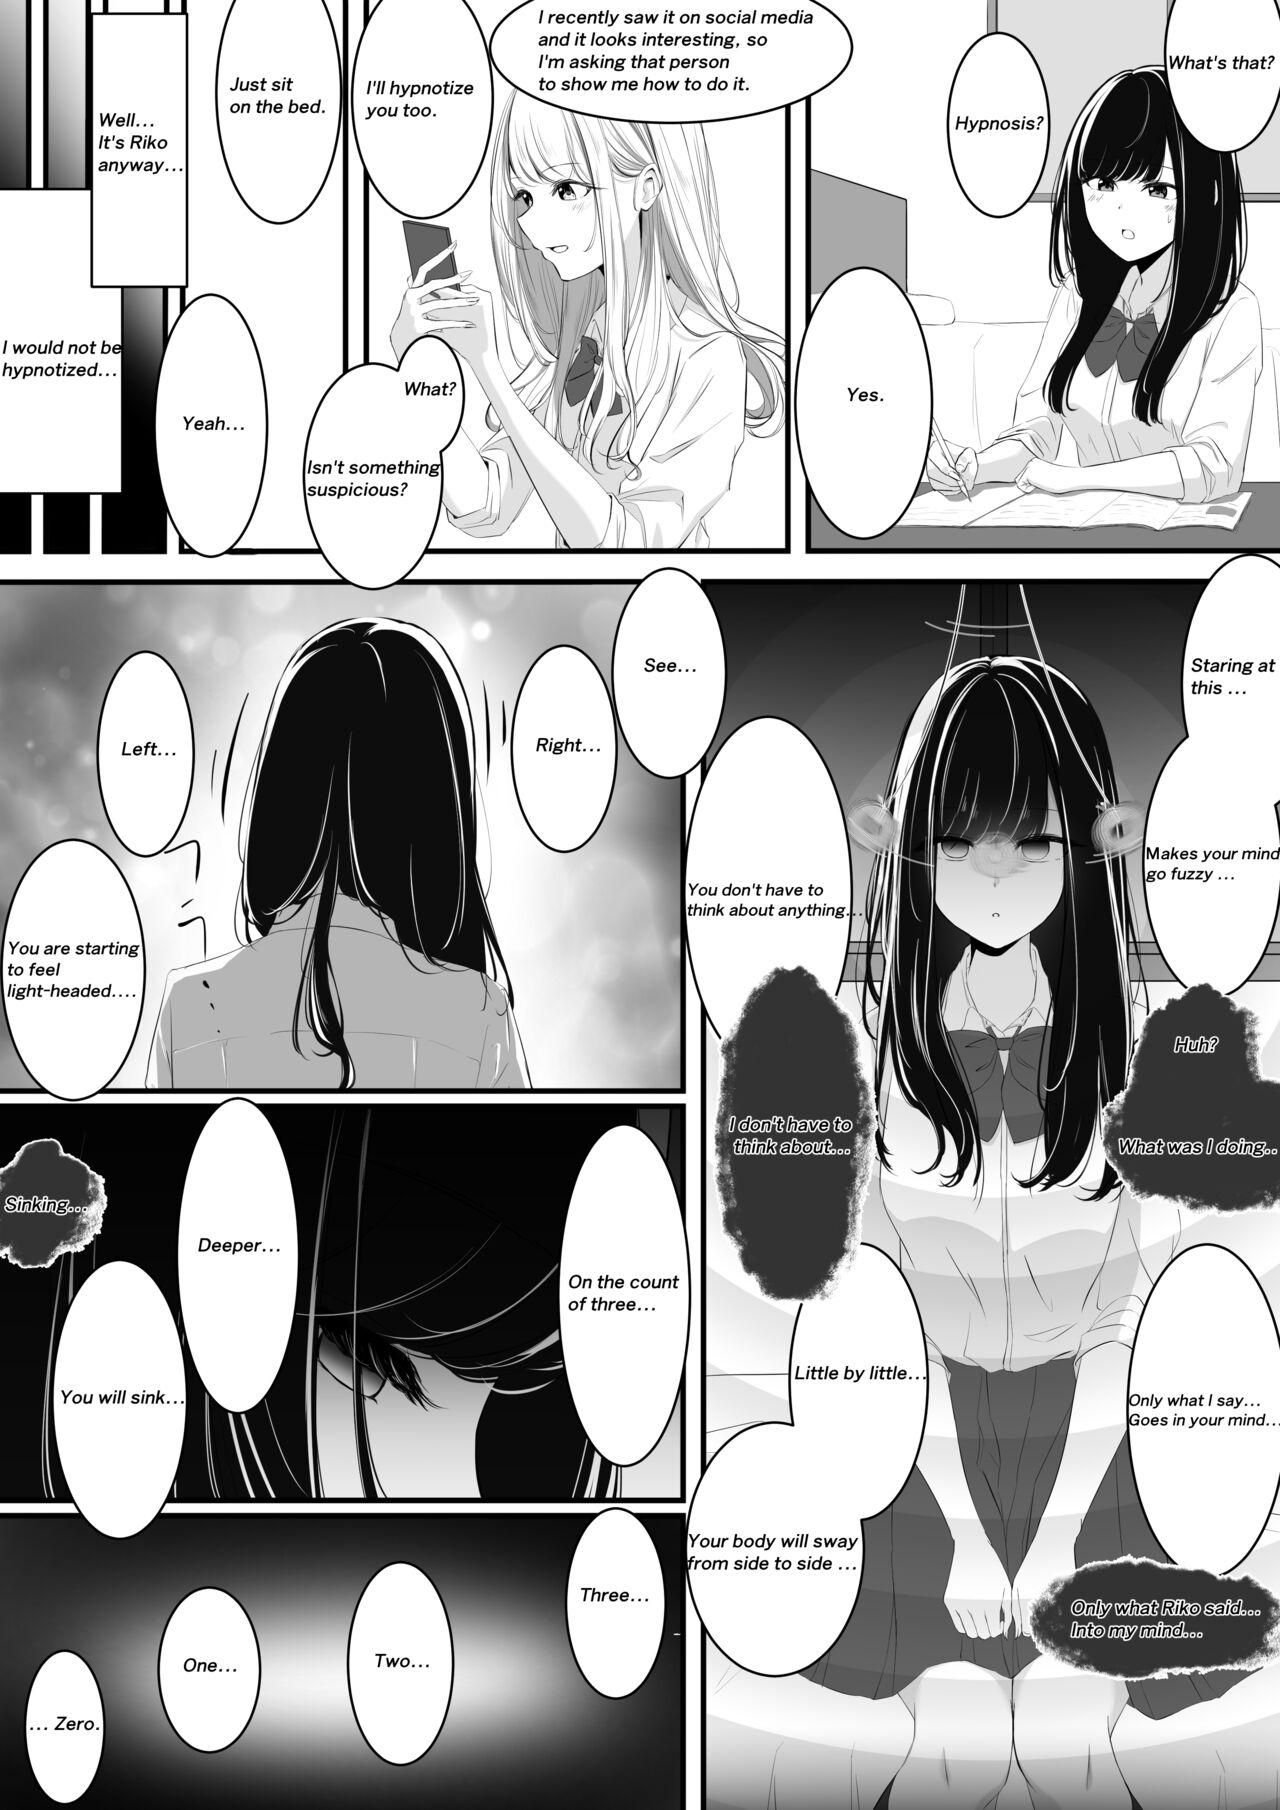 Yuri comic Part 1 and 2. 2